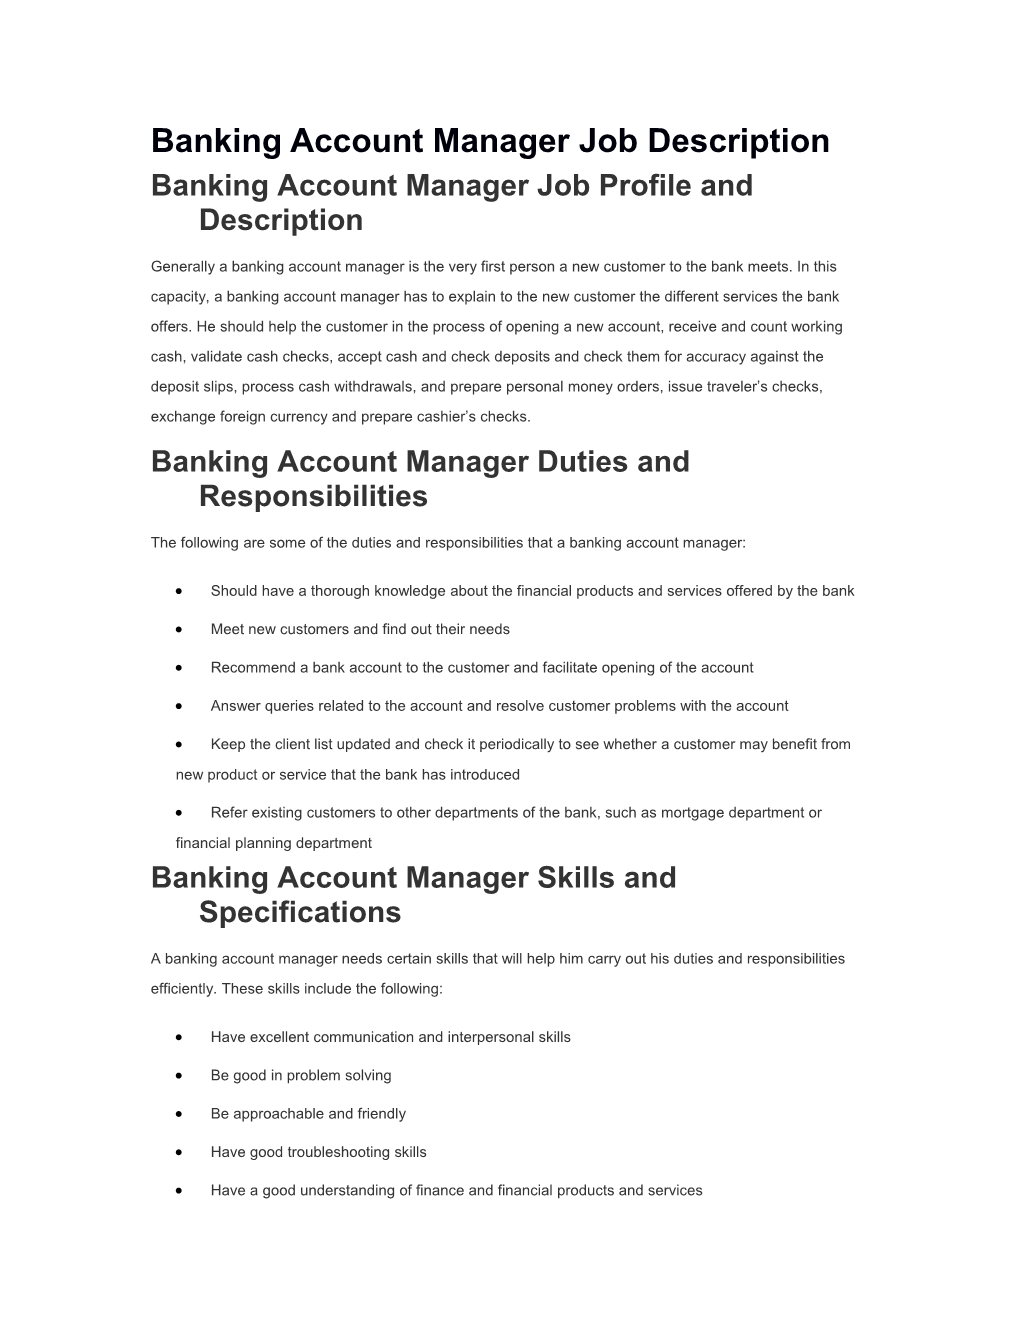 Banking Account Manager Job Description